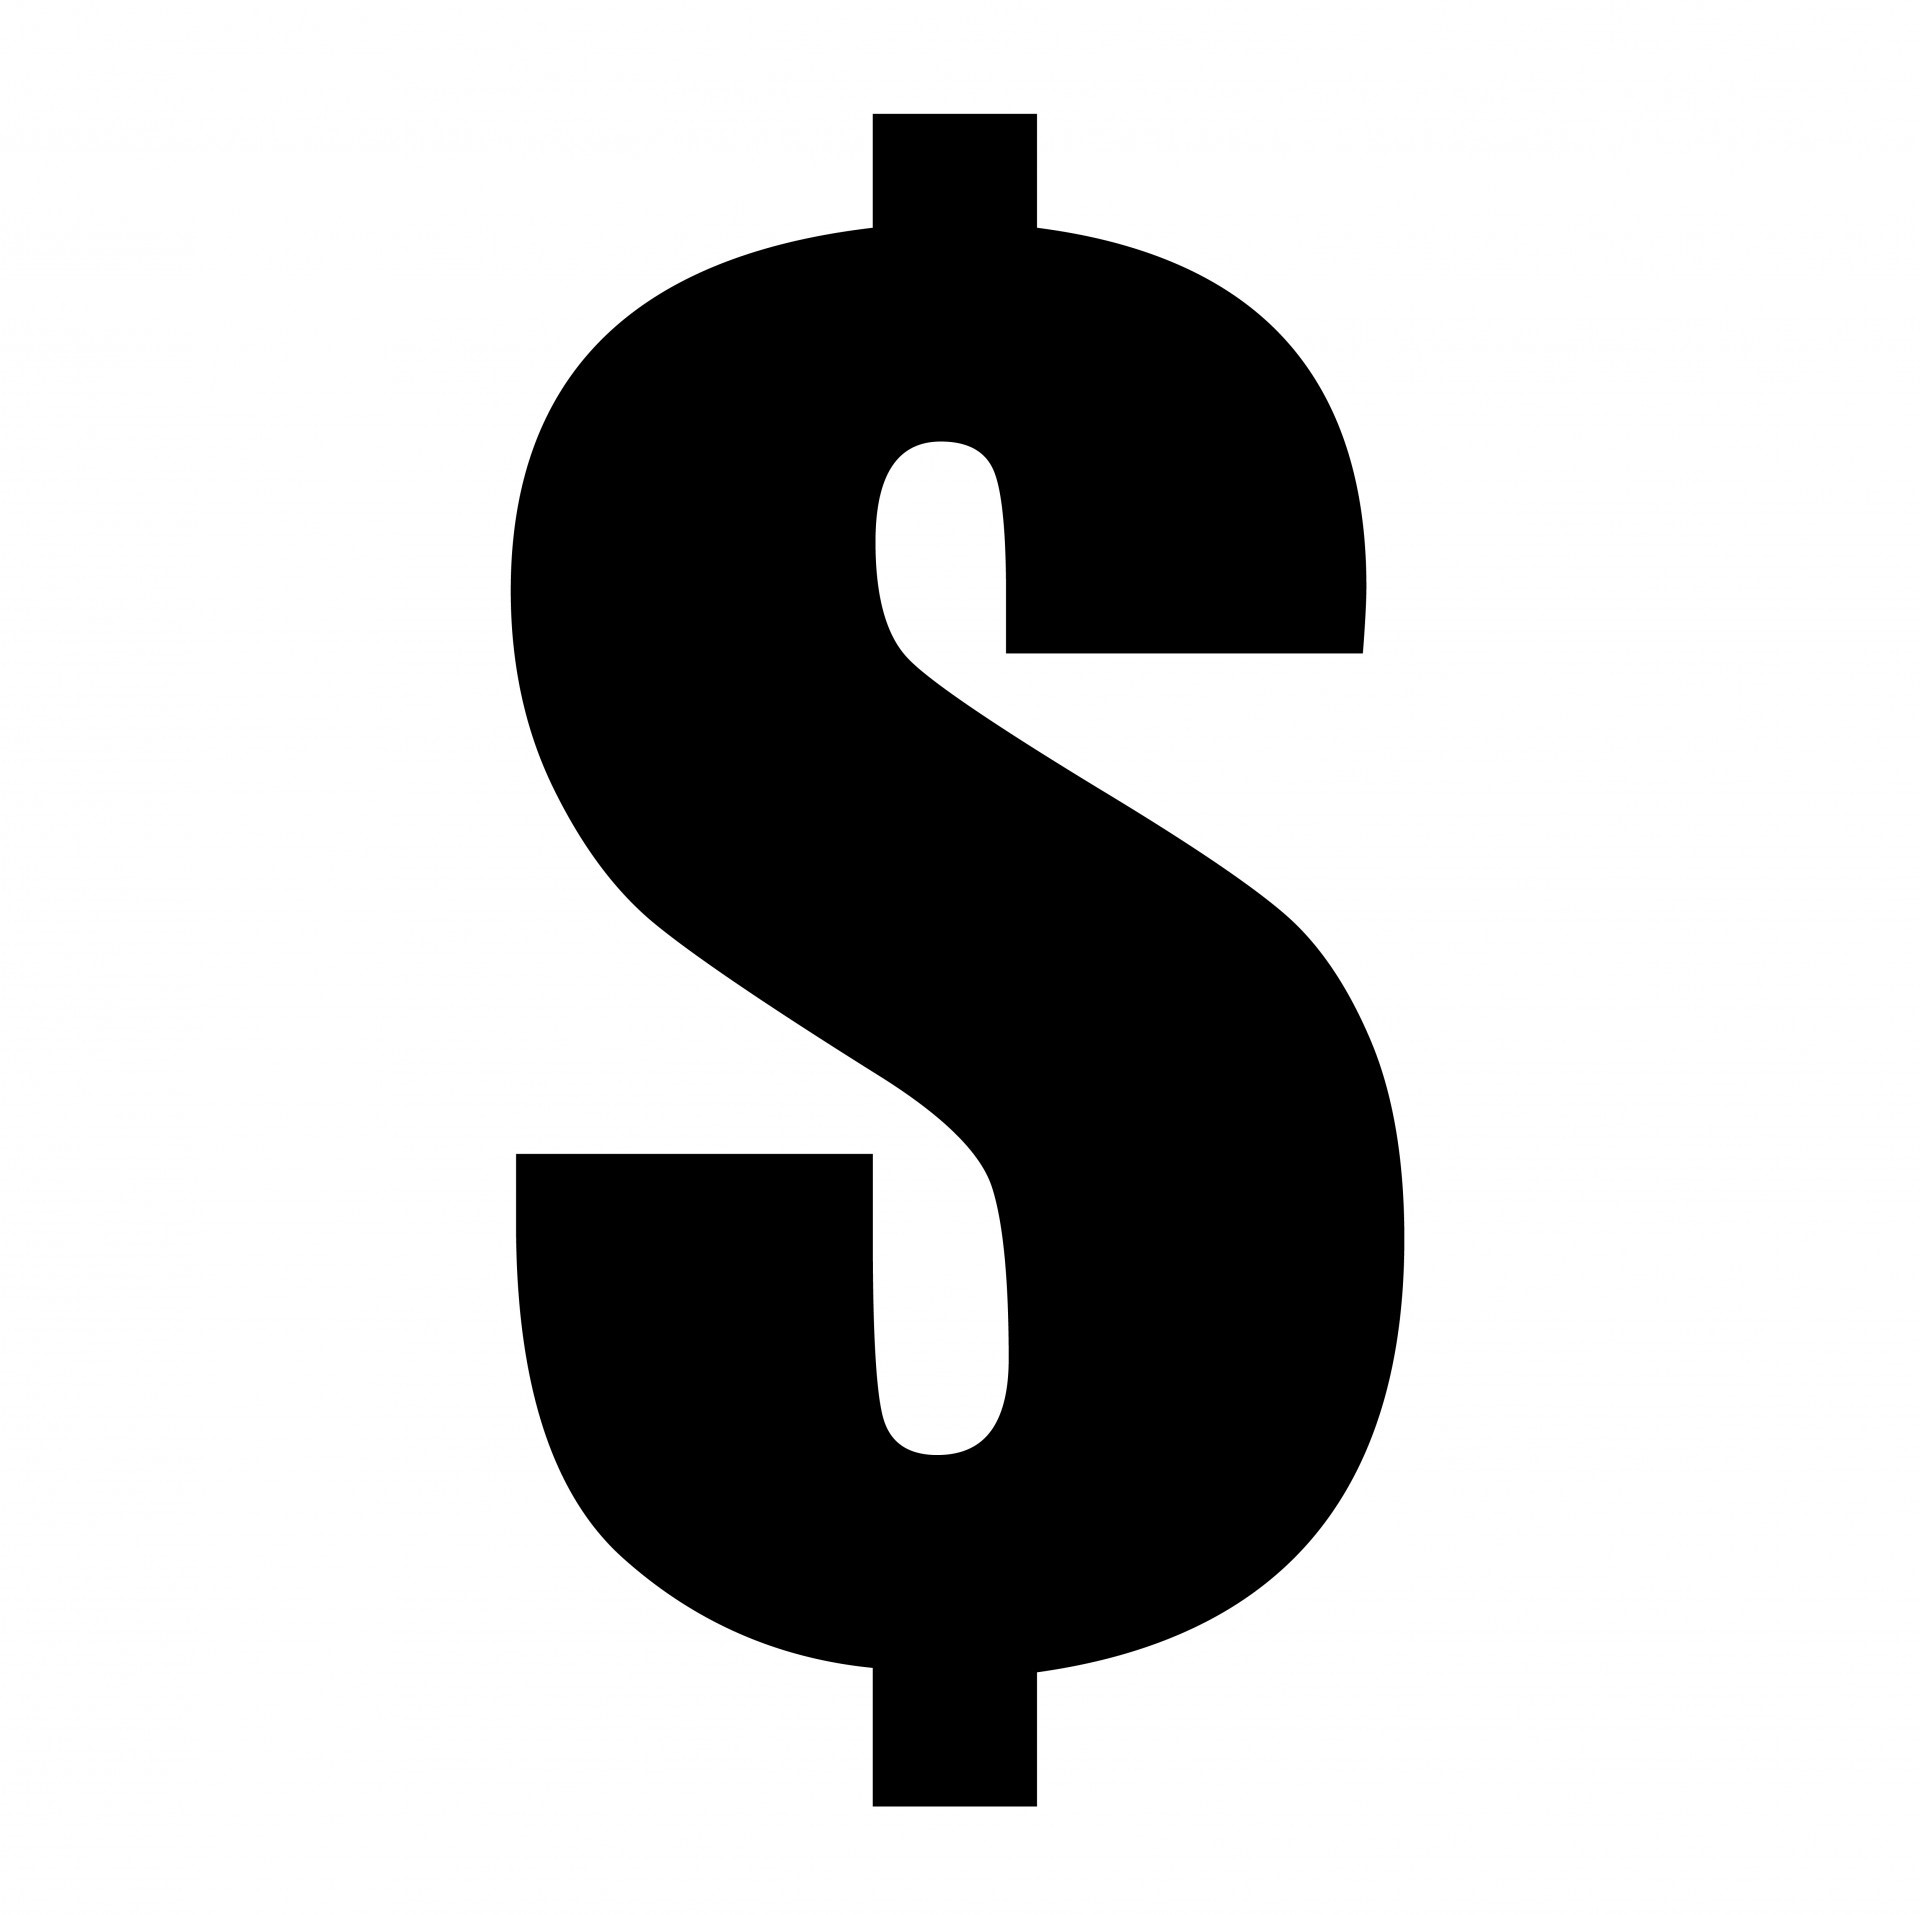 Dollar sign graphic